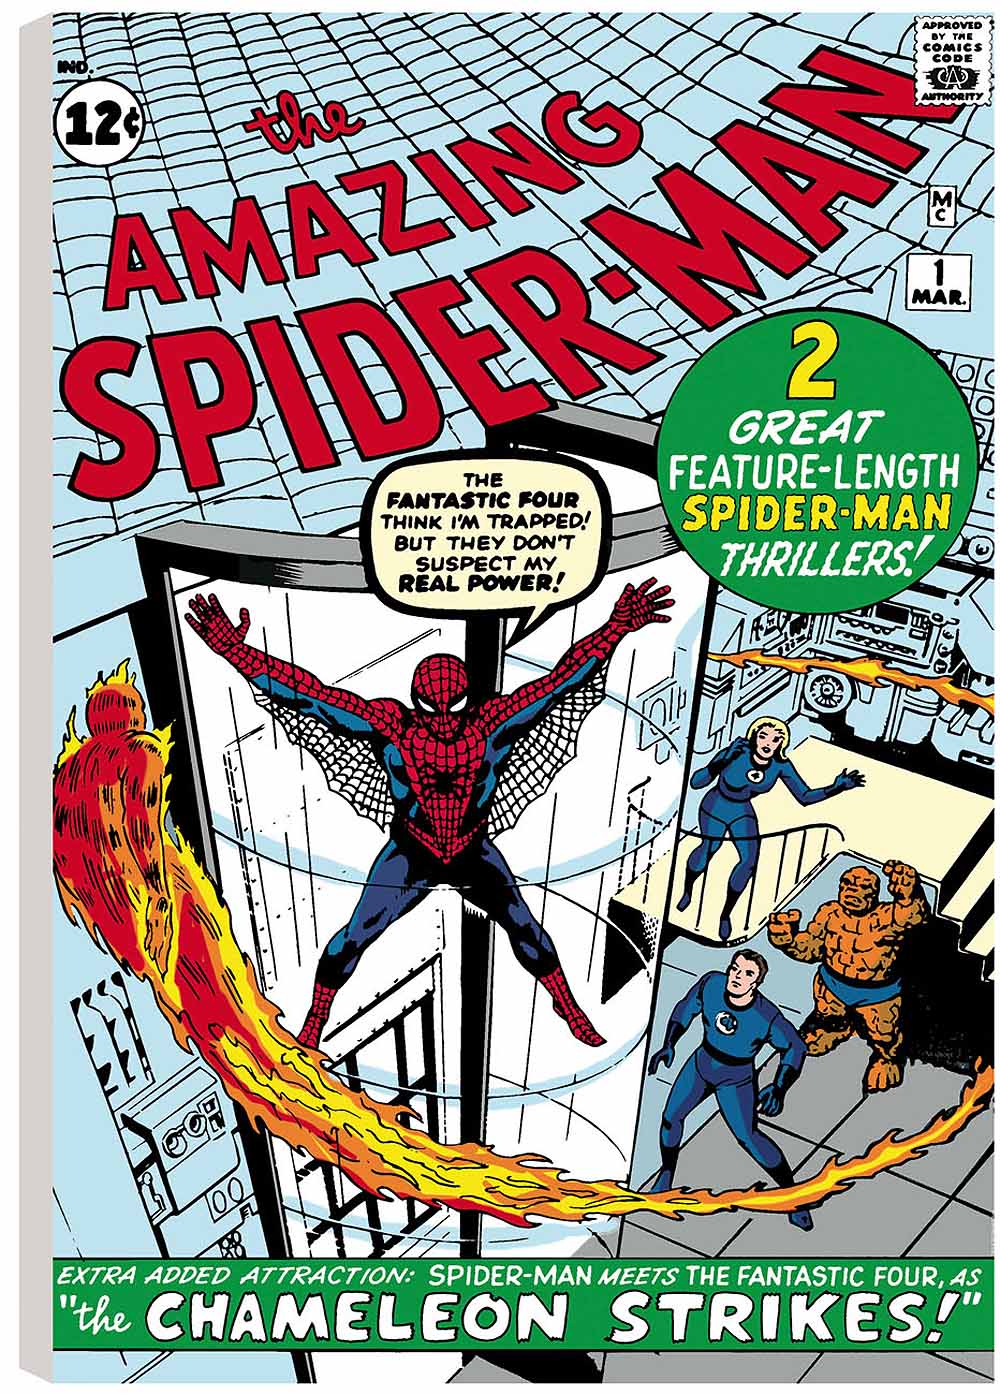 The Amazing Spider-Man #1: Spider-Man Meets The Fantastic Four - Box Canvas  | Marvel | Castle Fine Art